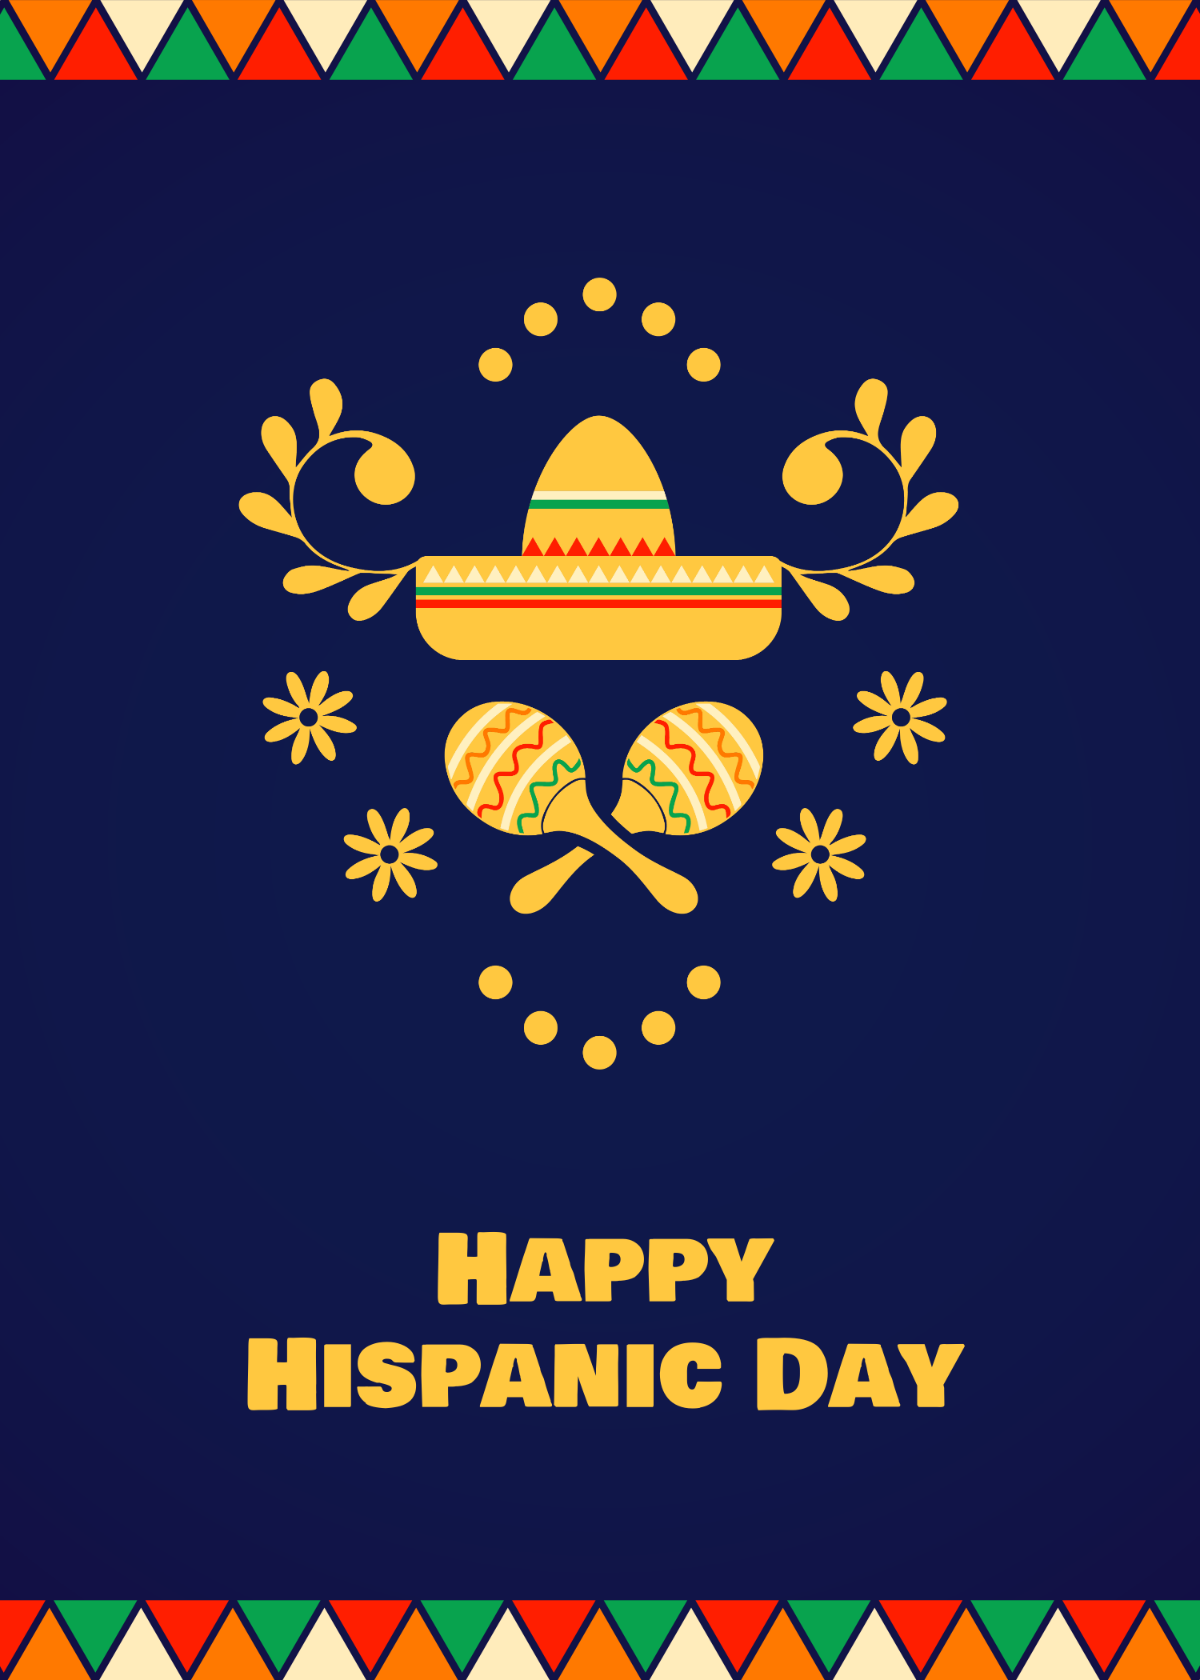 Hispanic Day Greeting Card